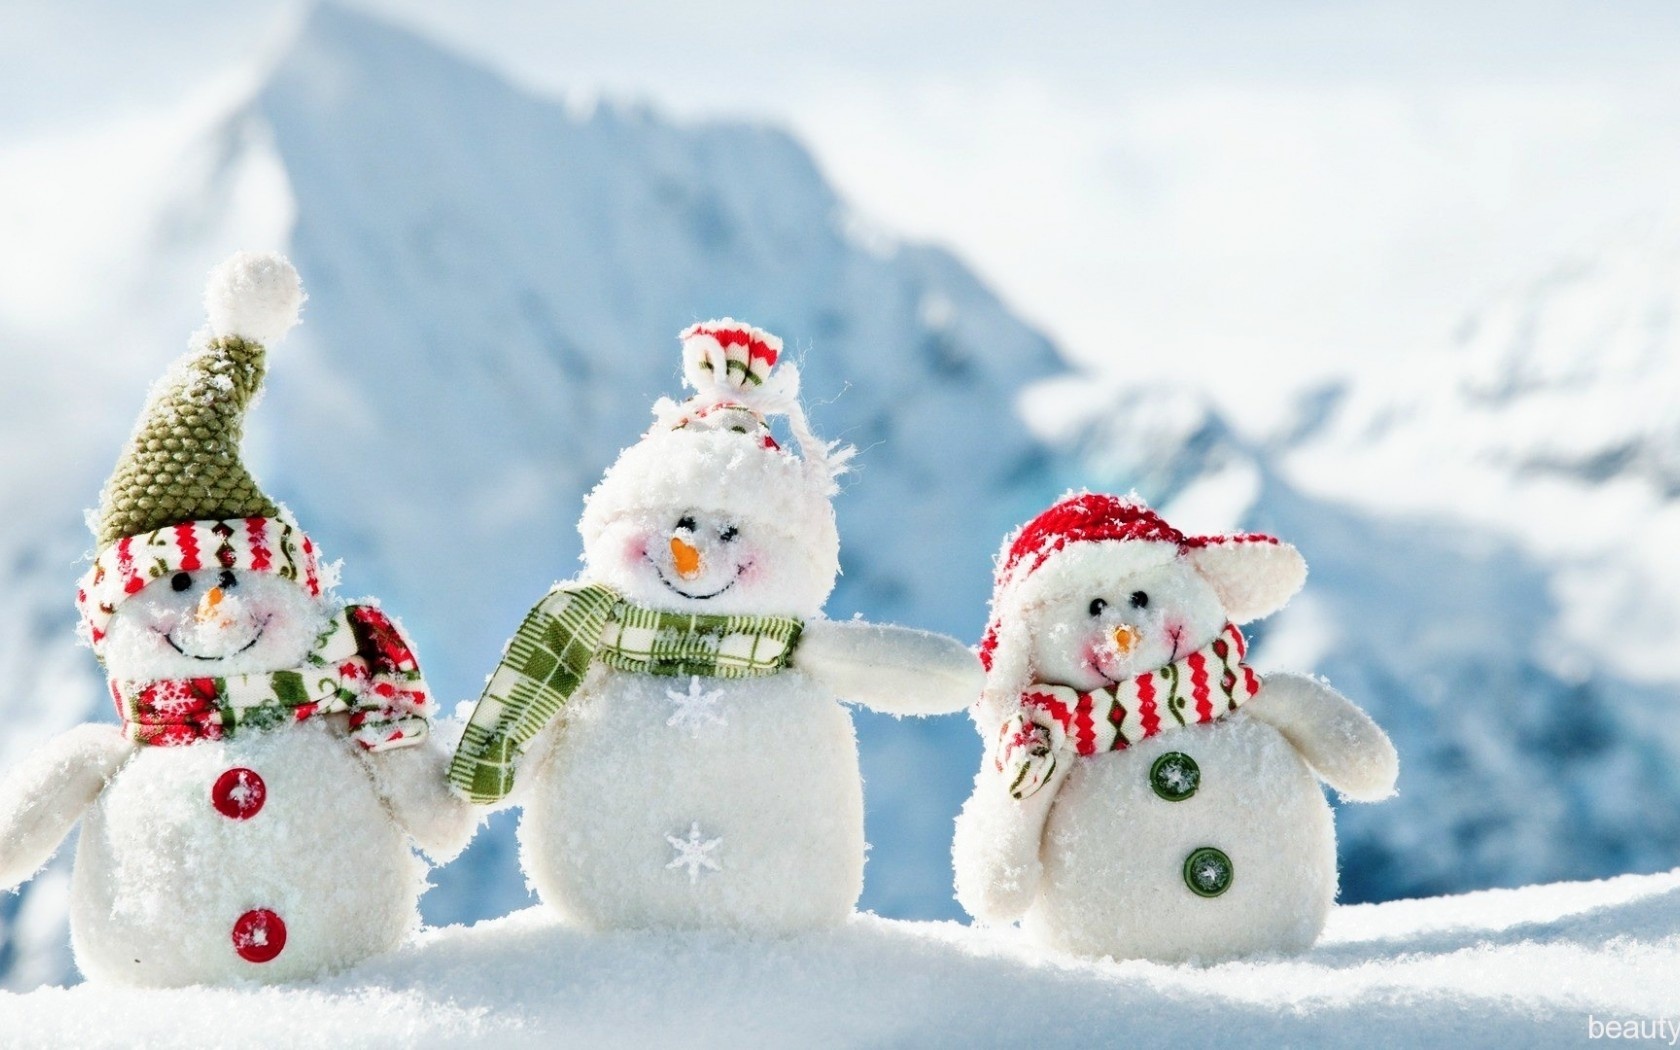 snowman wallpaper hd,snow,snowman,winter,frost,freezing